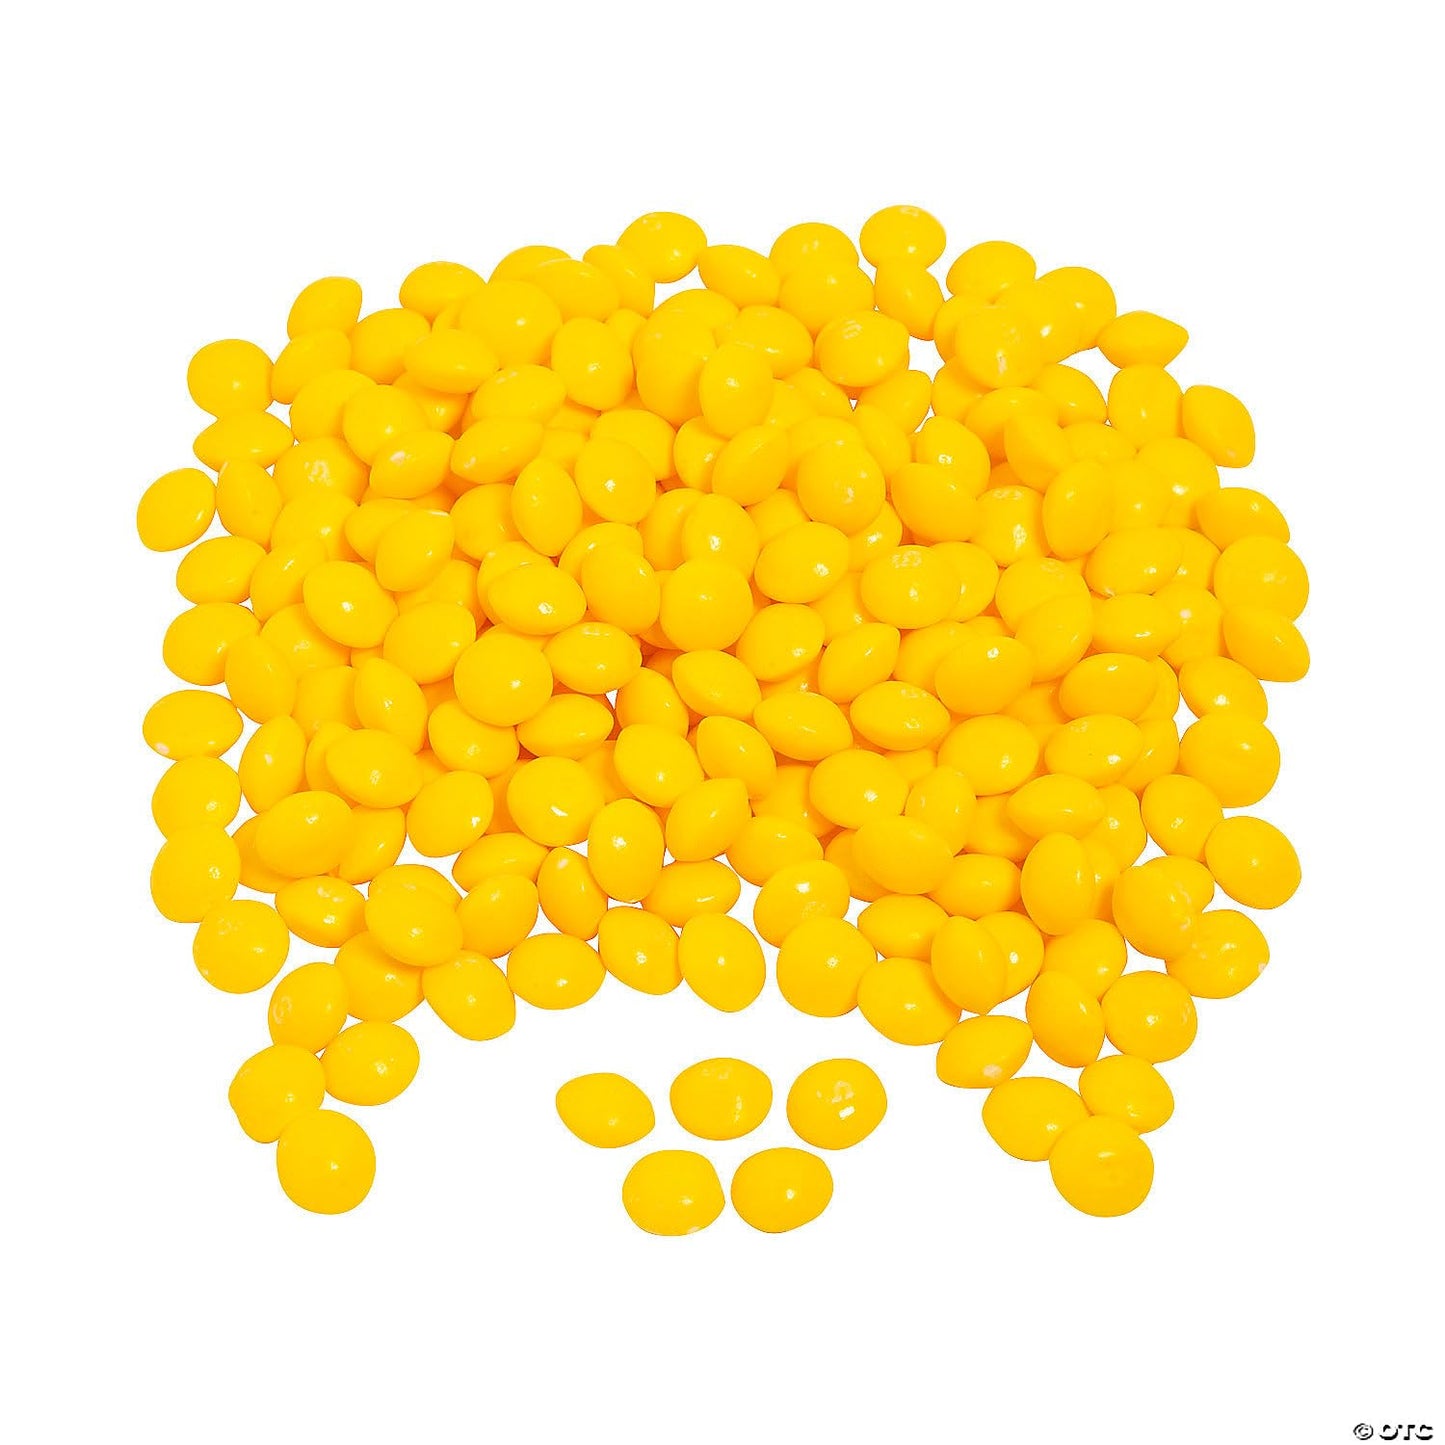 Original Skittles Lemon Flavor Only - 3lbs Bulk 1300+ Pcs Resealable Bag (48oz) - Unwrapped Loose